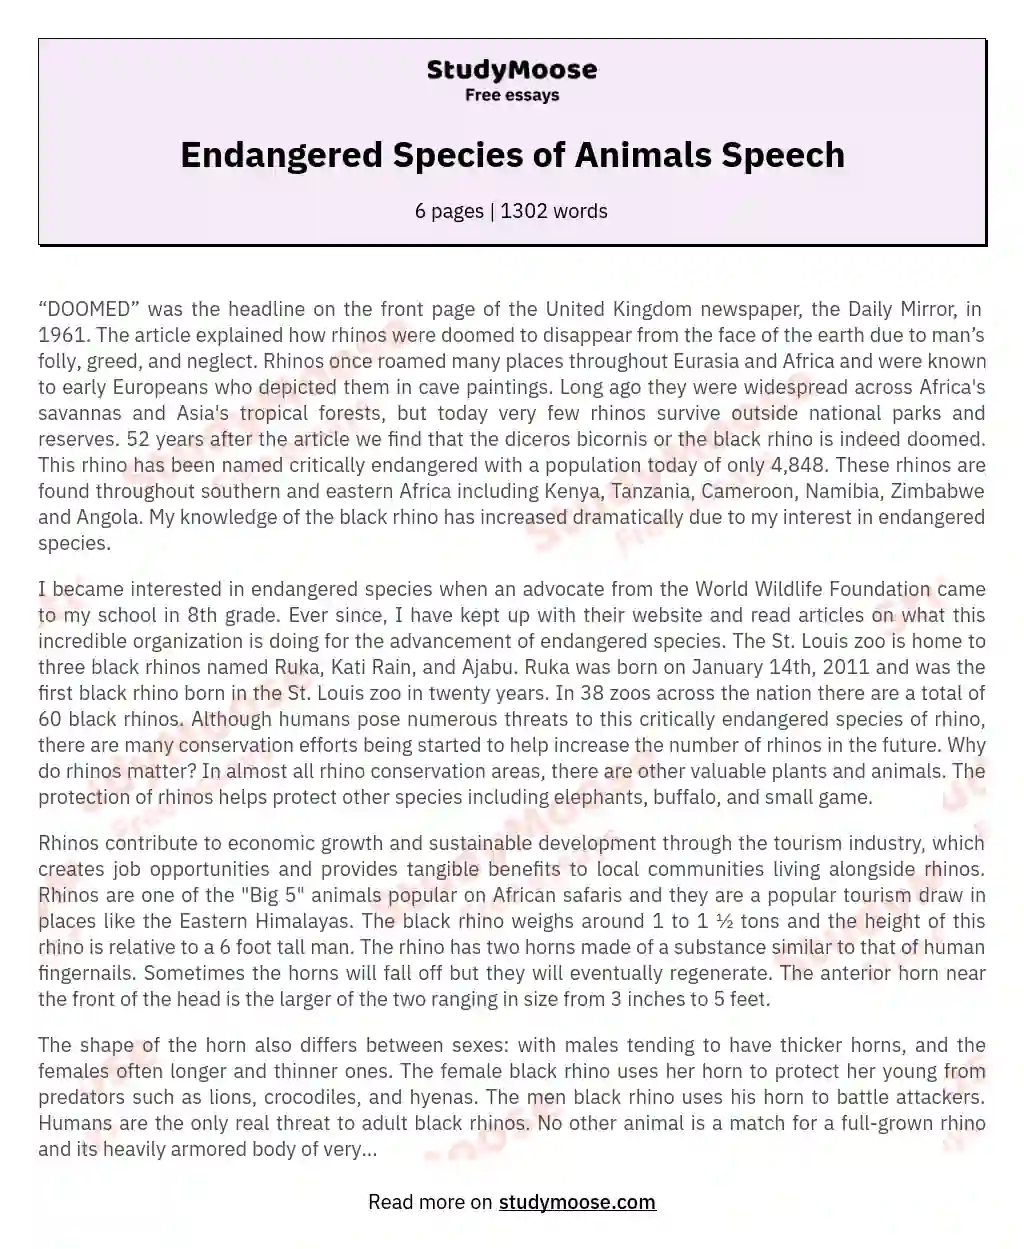 Endangered Species of Animals Speech